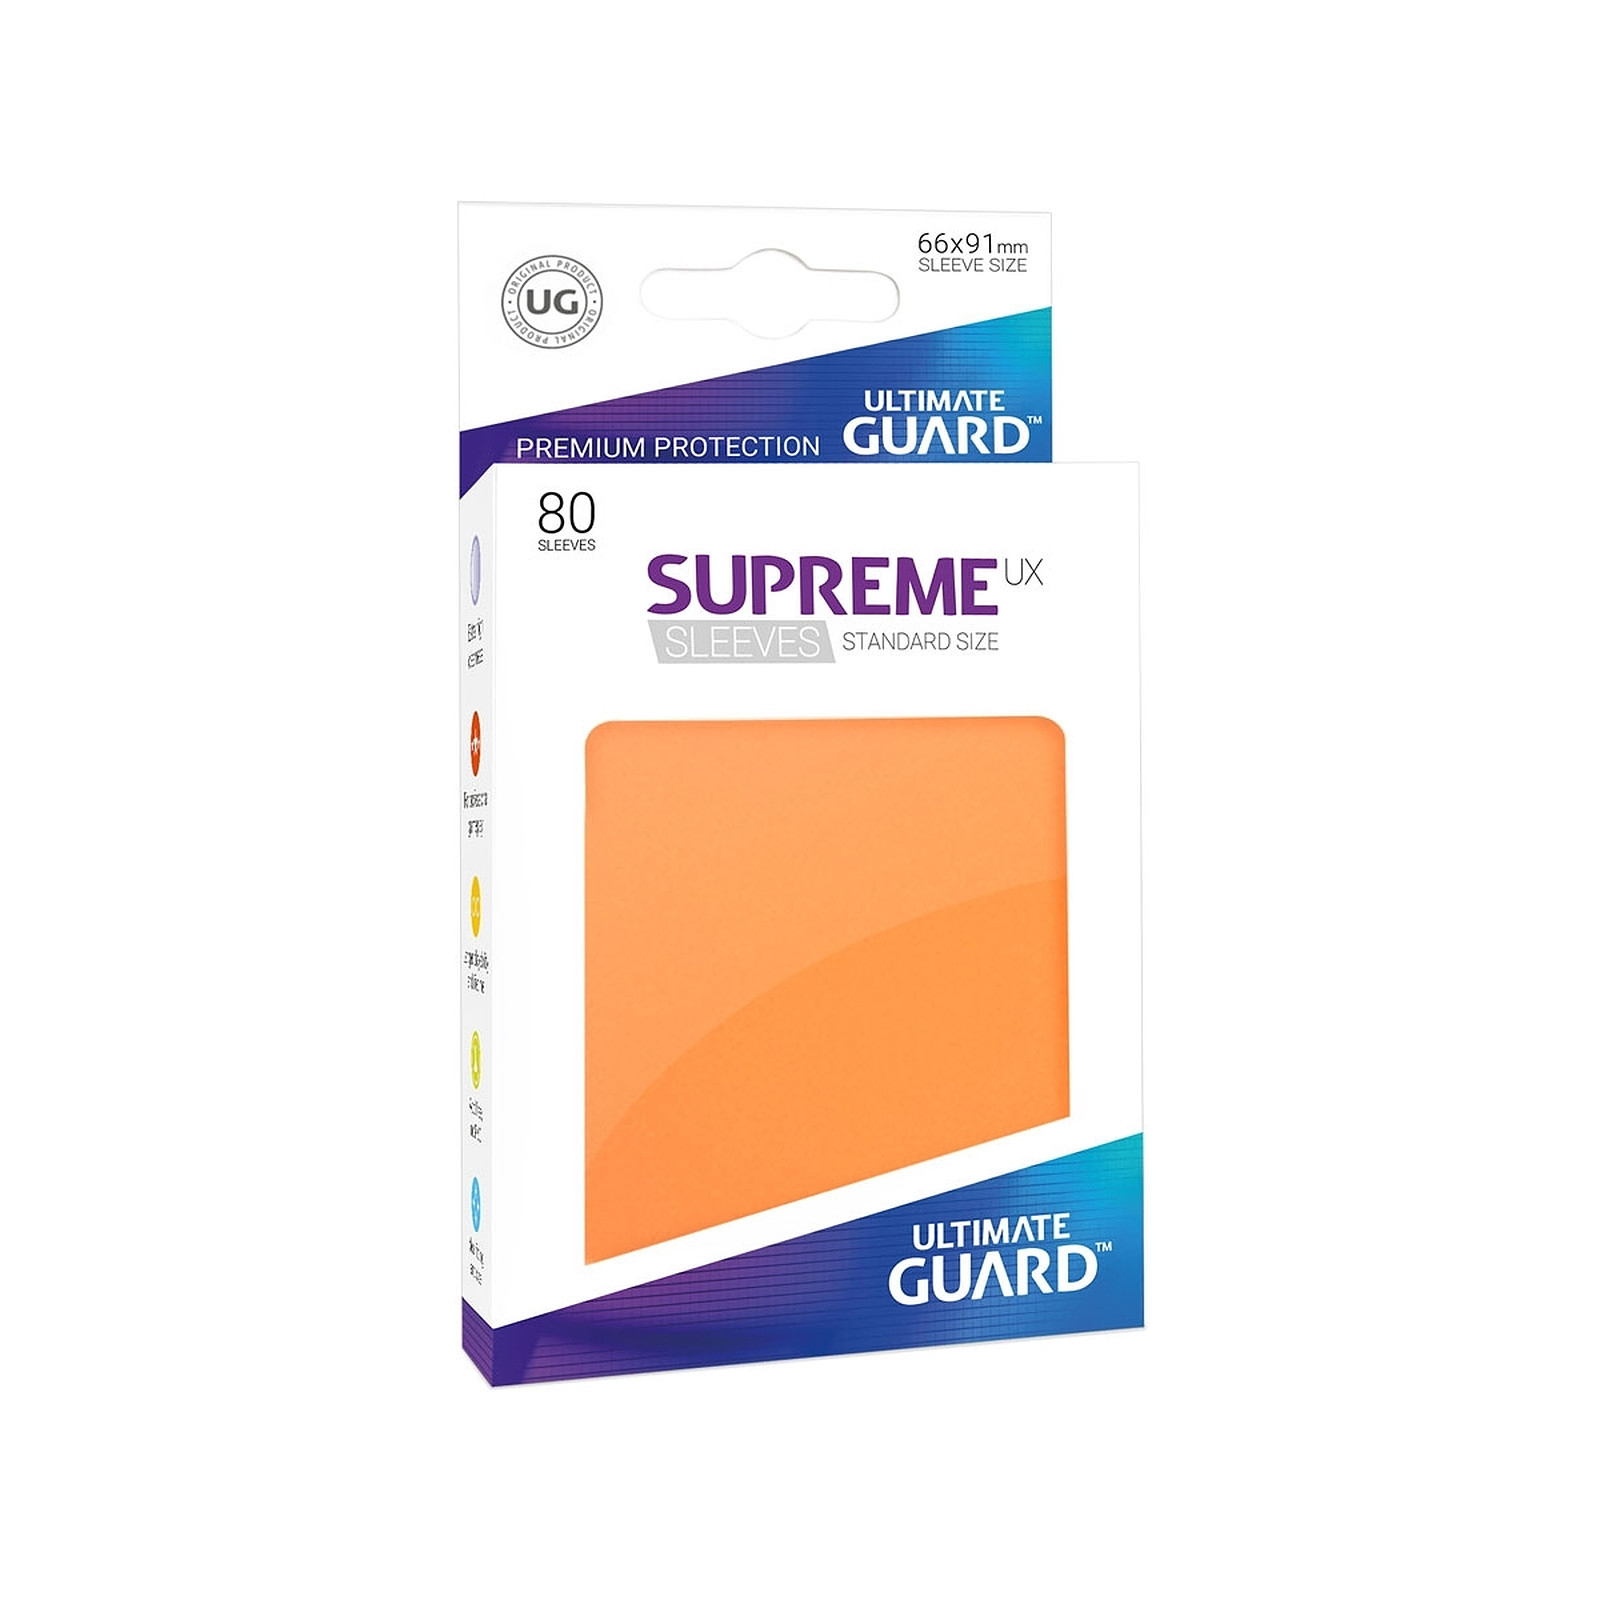 Ultimate Guard - 80 pochettes Supreme UX Sleeves taille standard Orange - Accessoire jeux Ultimate Guard